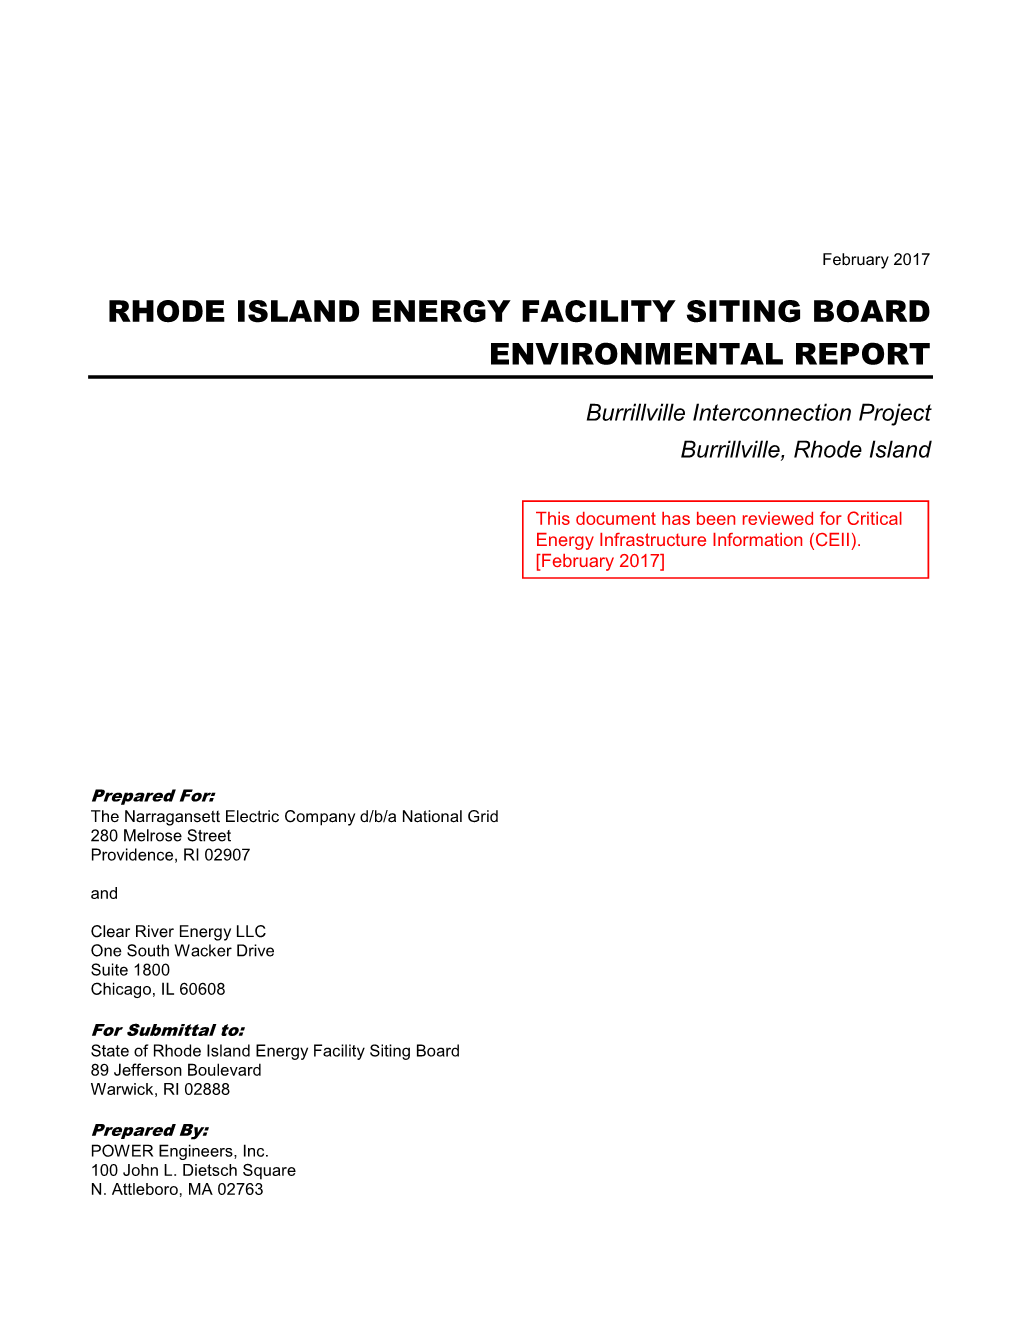 Rhode Island Energy Facility Siting Board Environmental Report